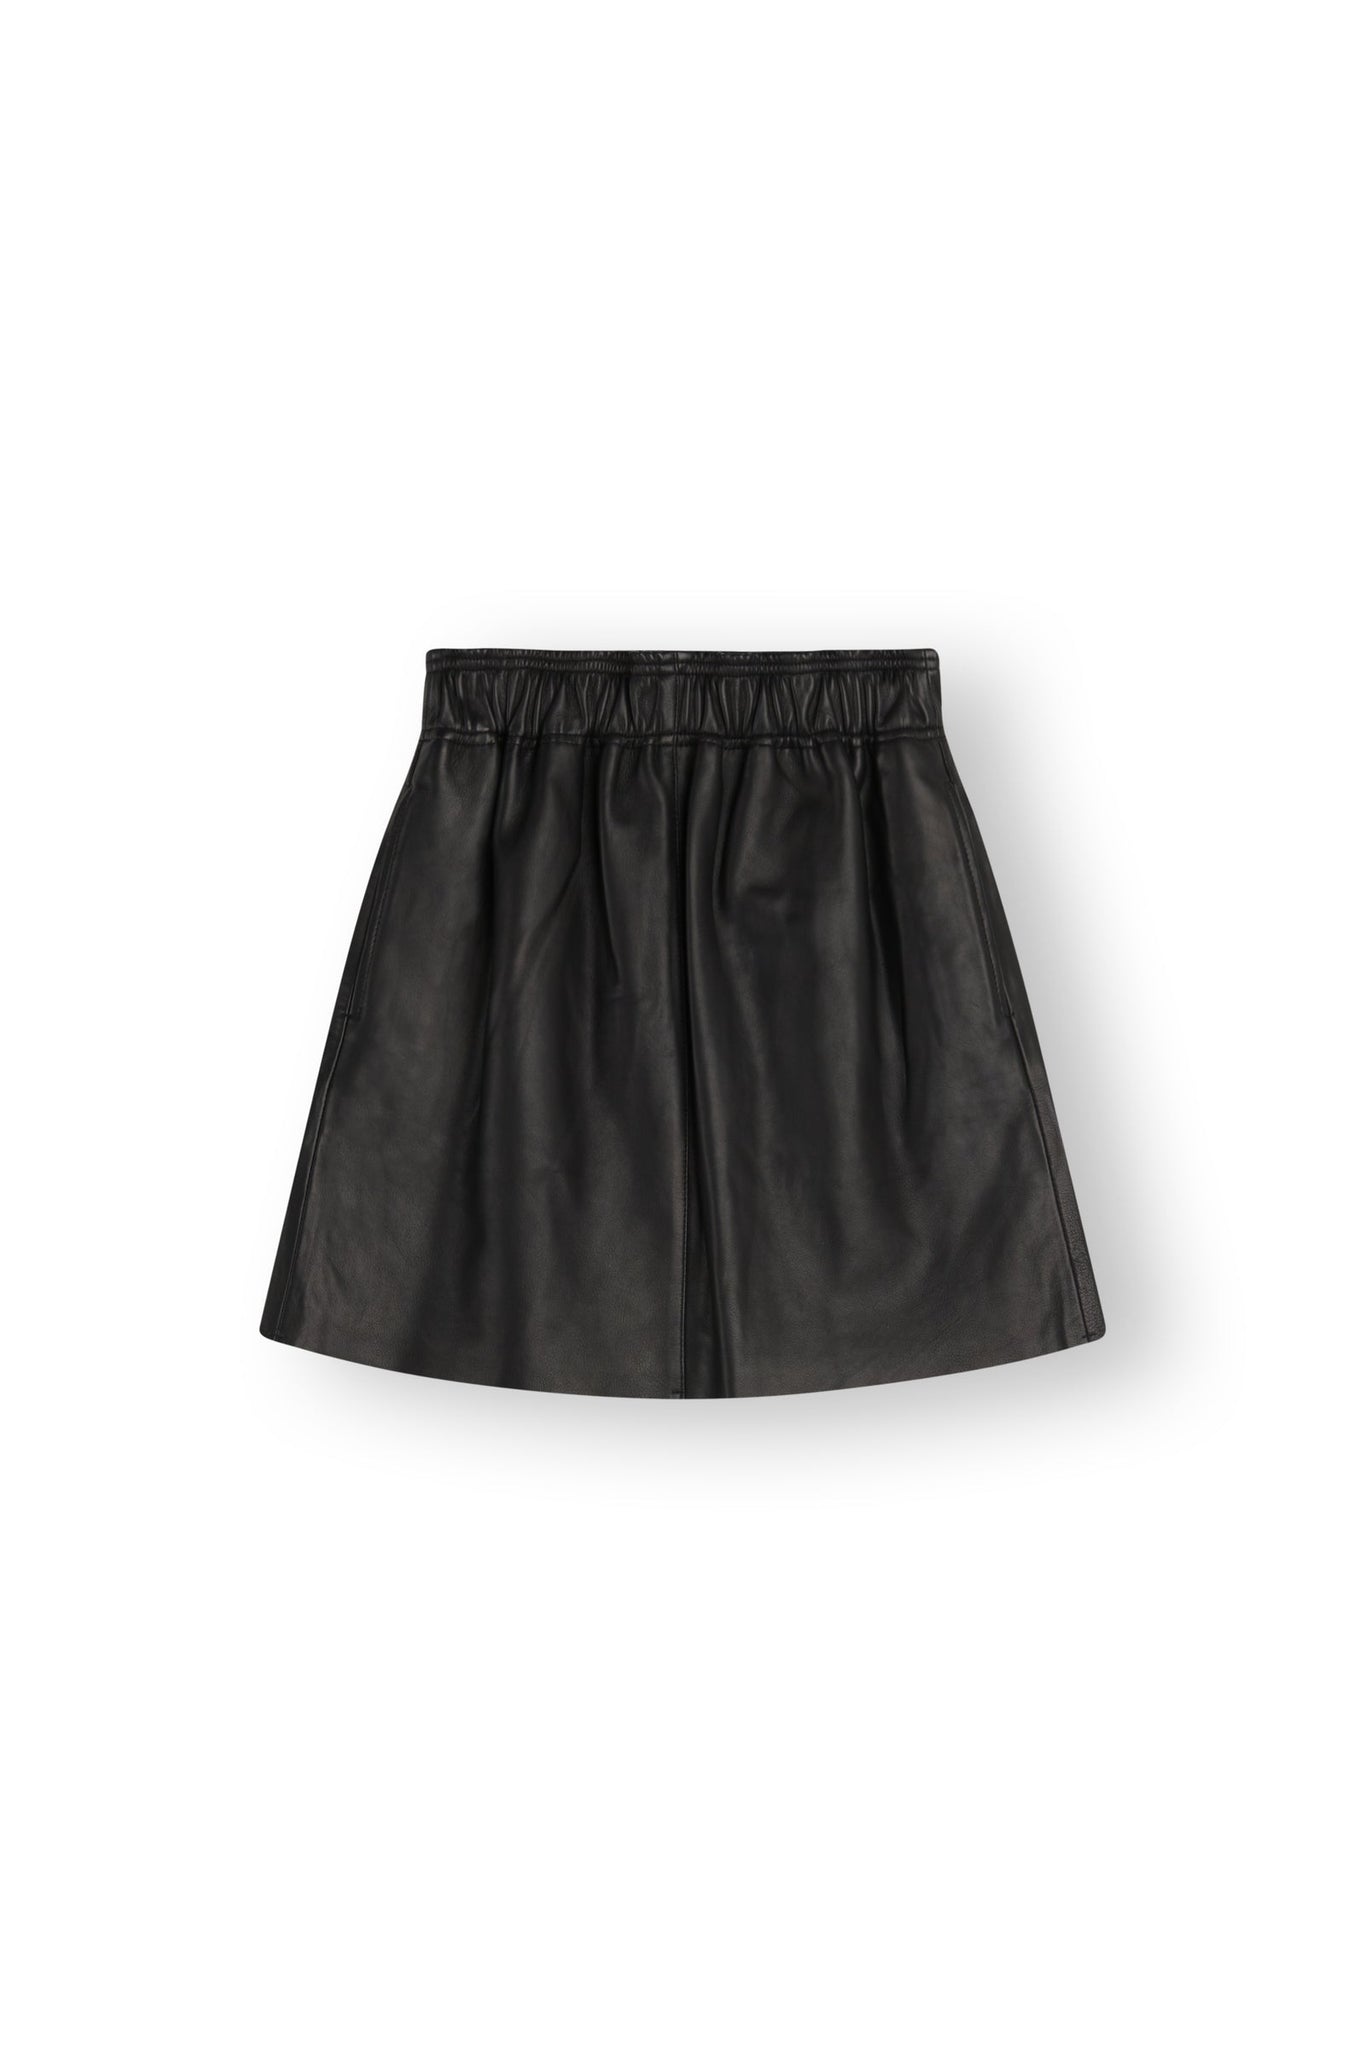 Shelby leather skirt - black